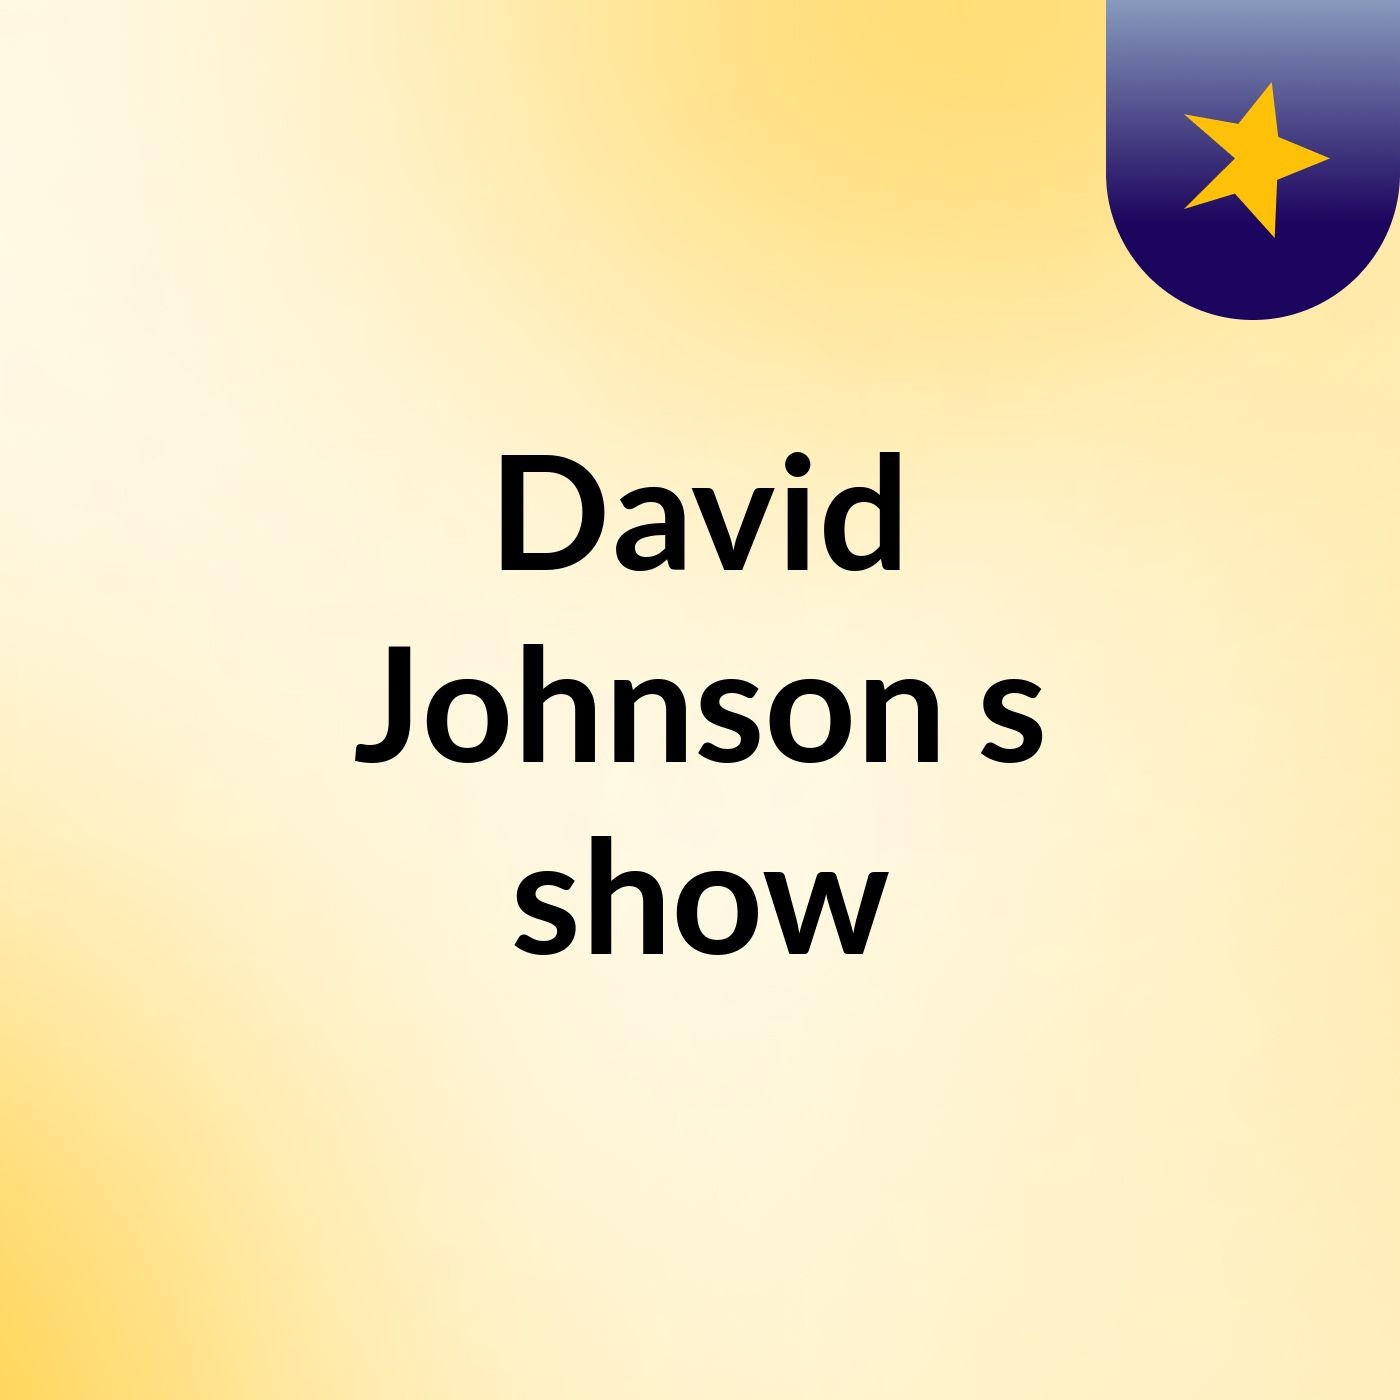 David Johnson's show